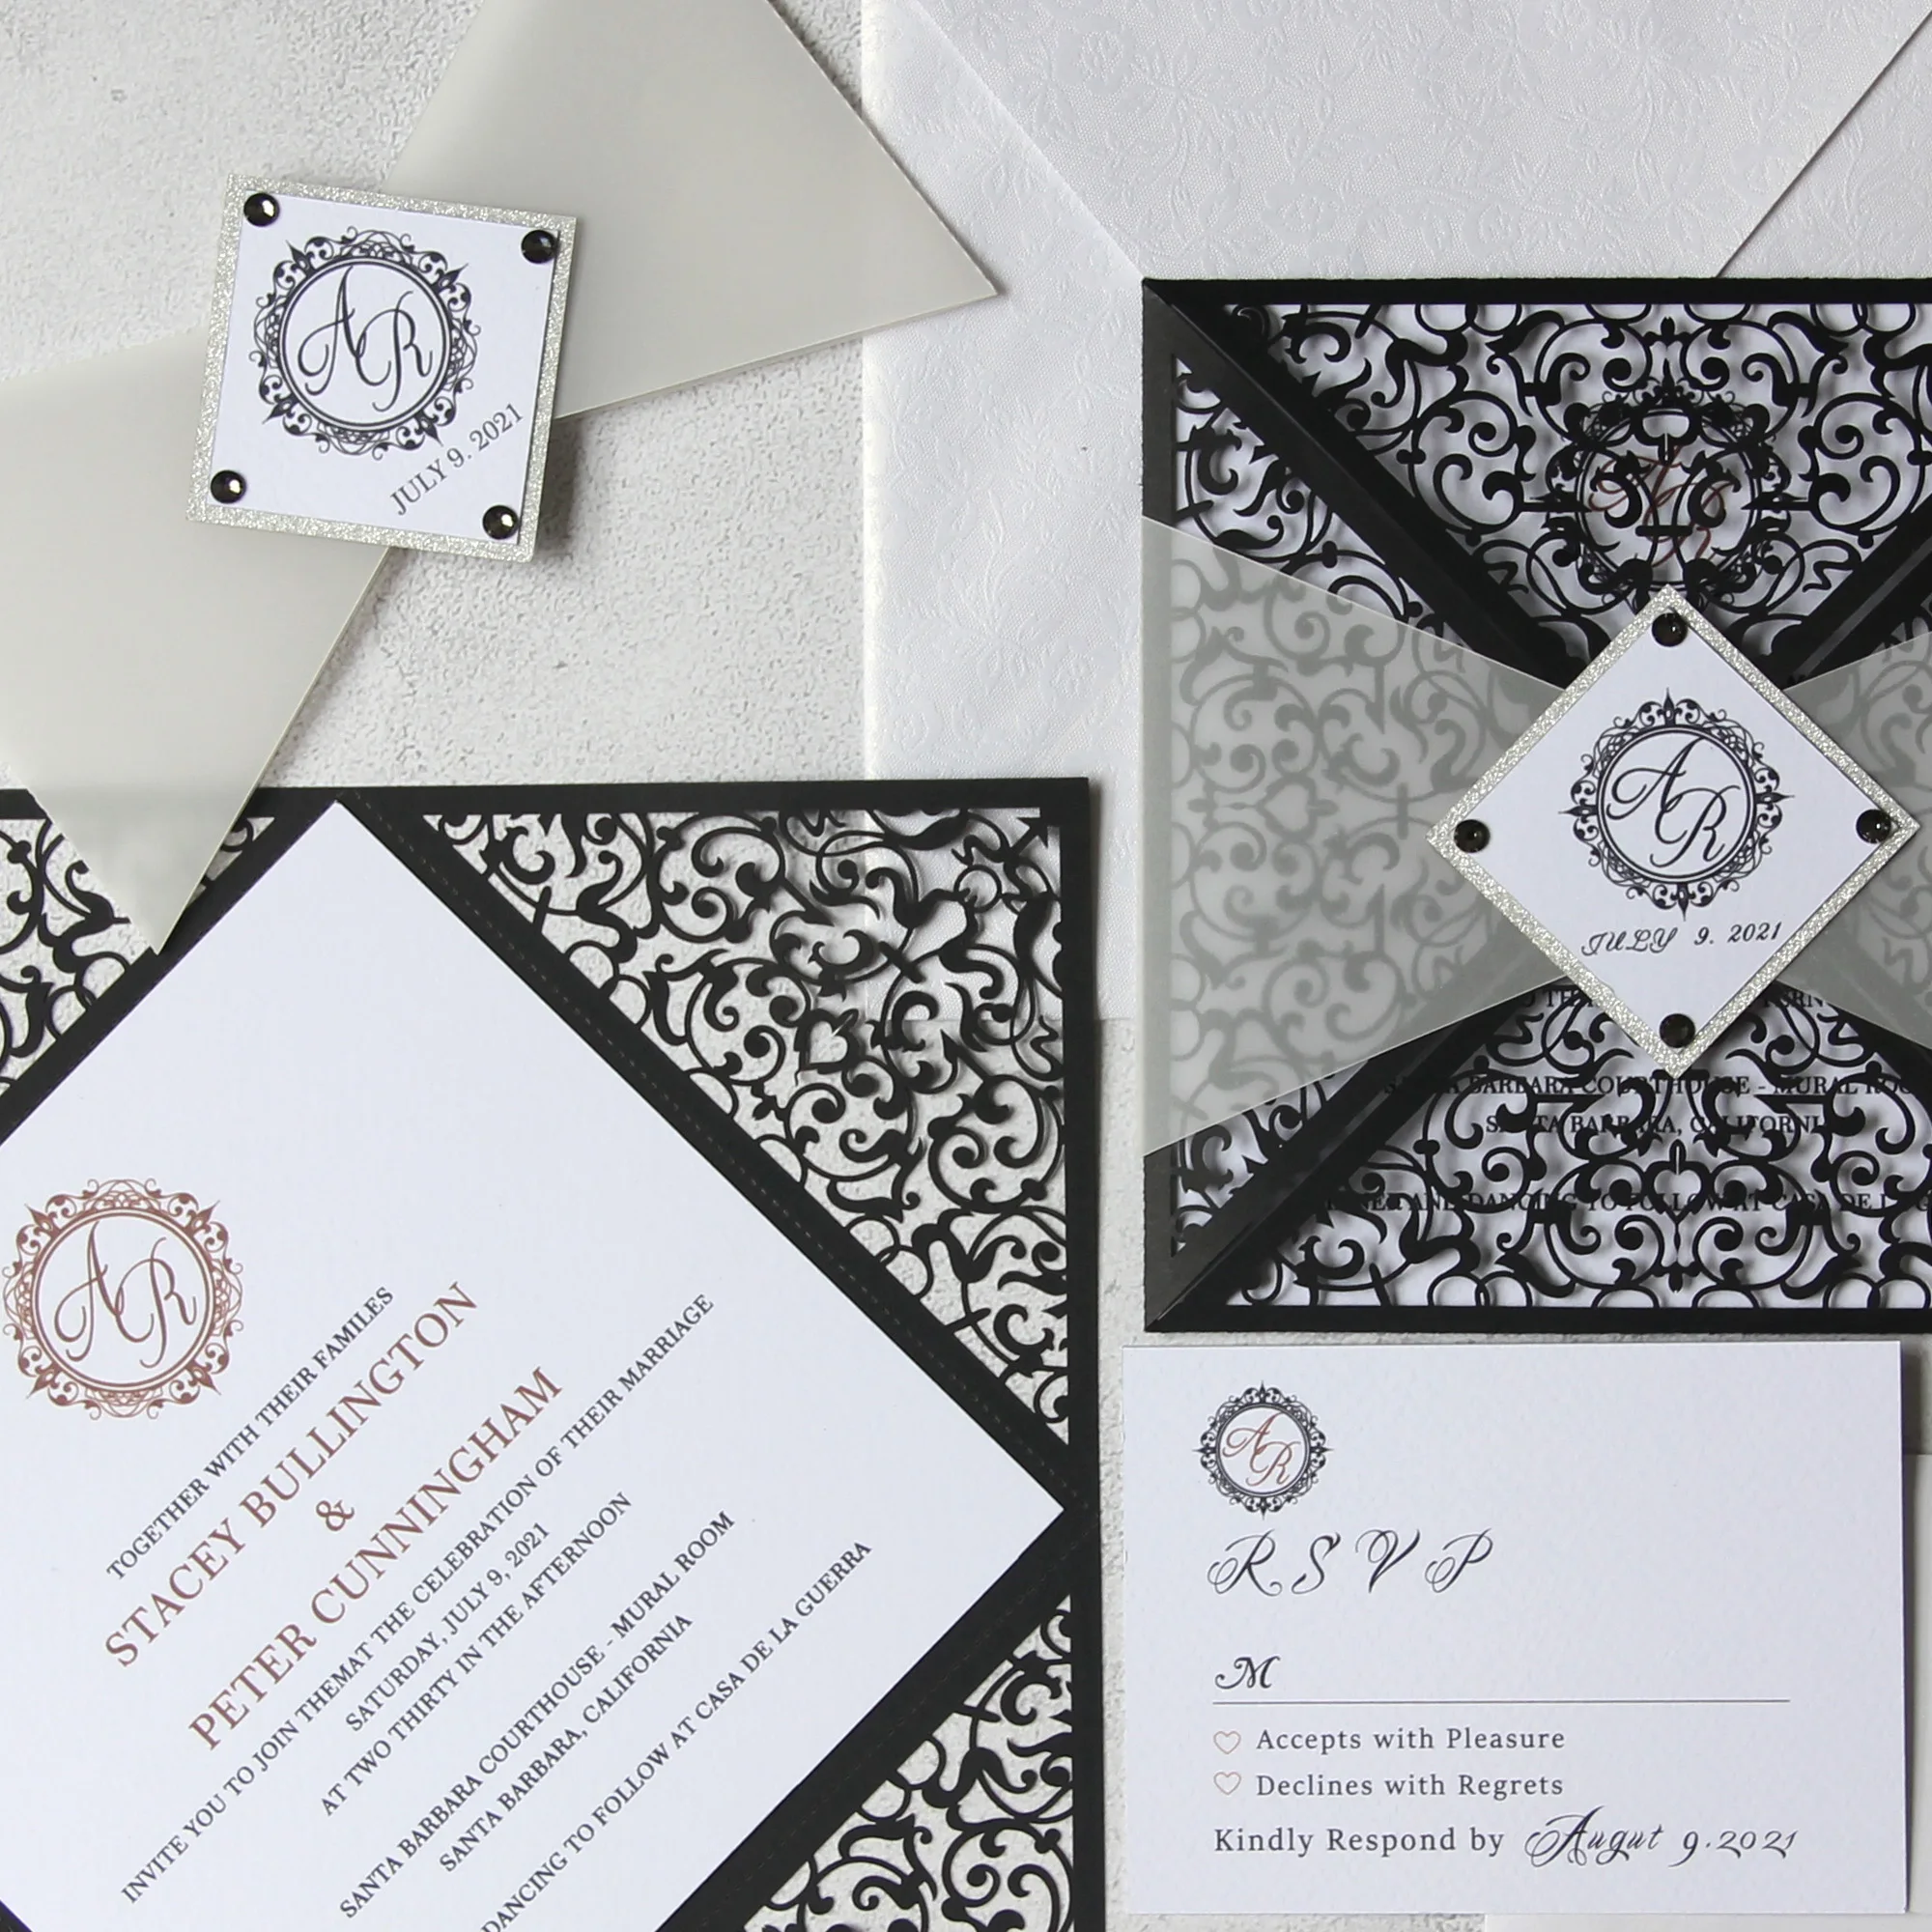 Print custom invitations Elegant Square Laser Cut Wedding Invitations Cards Wedding Decoration Party Supplies